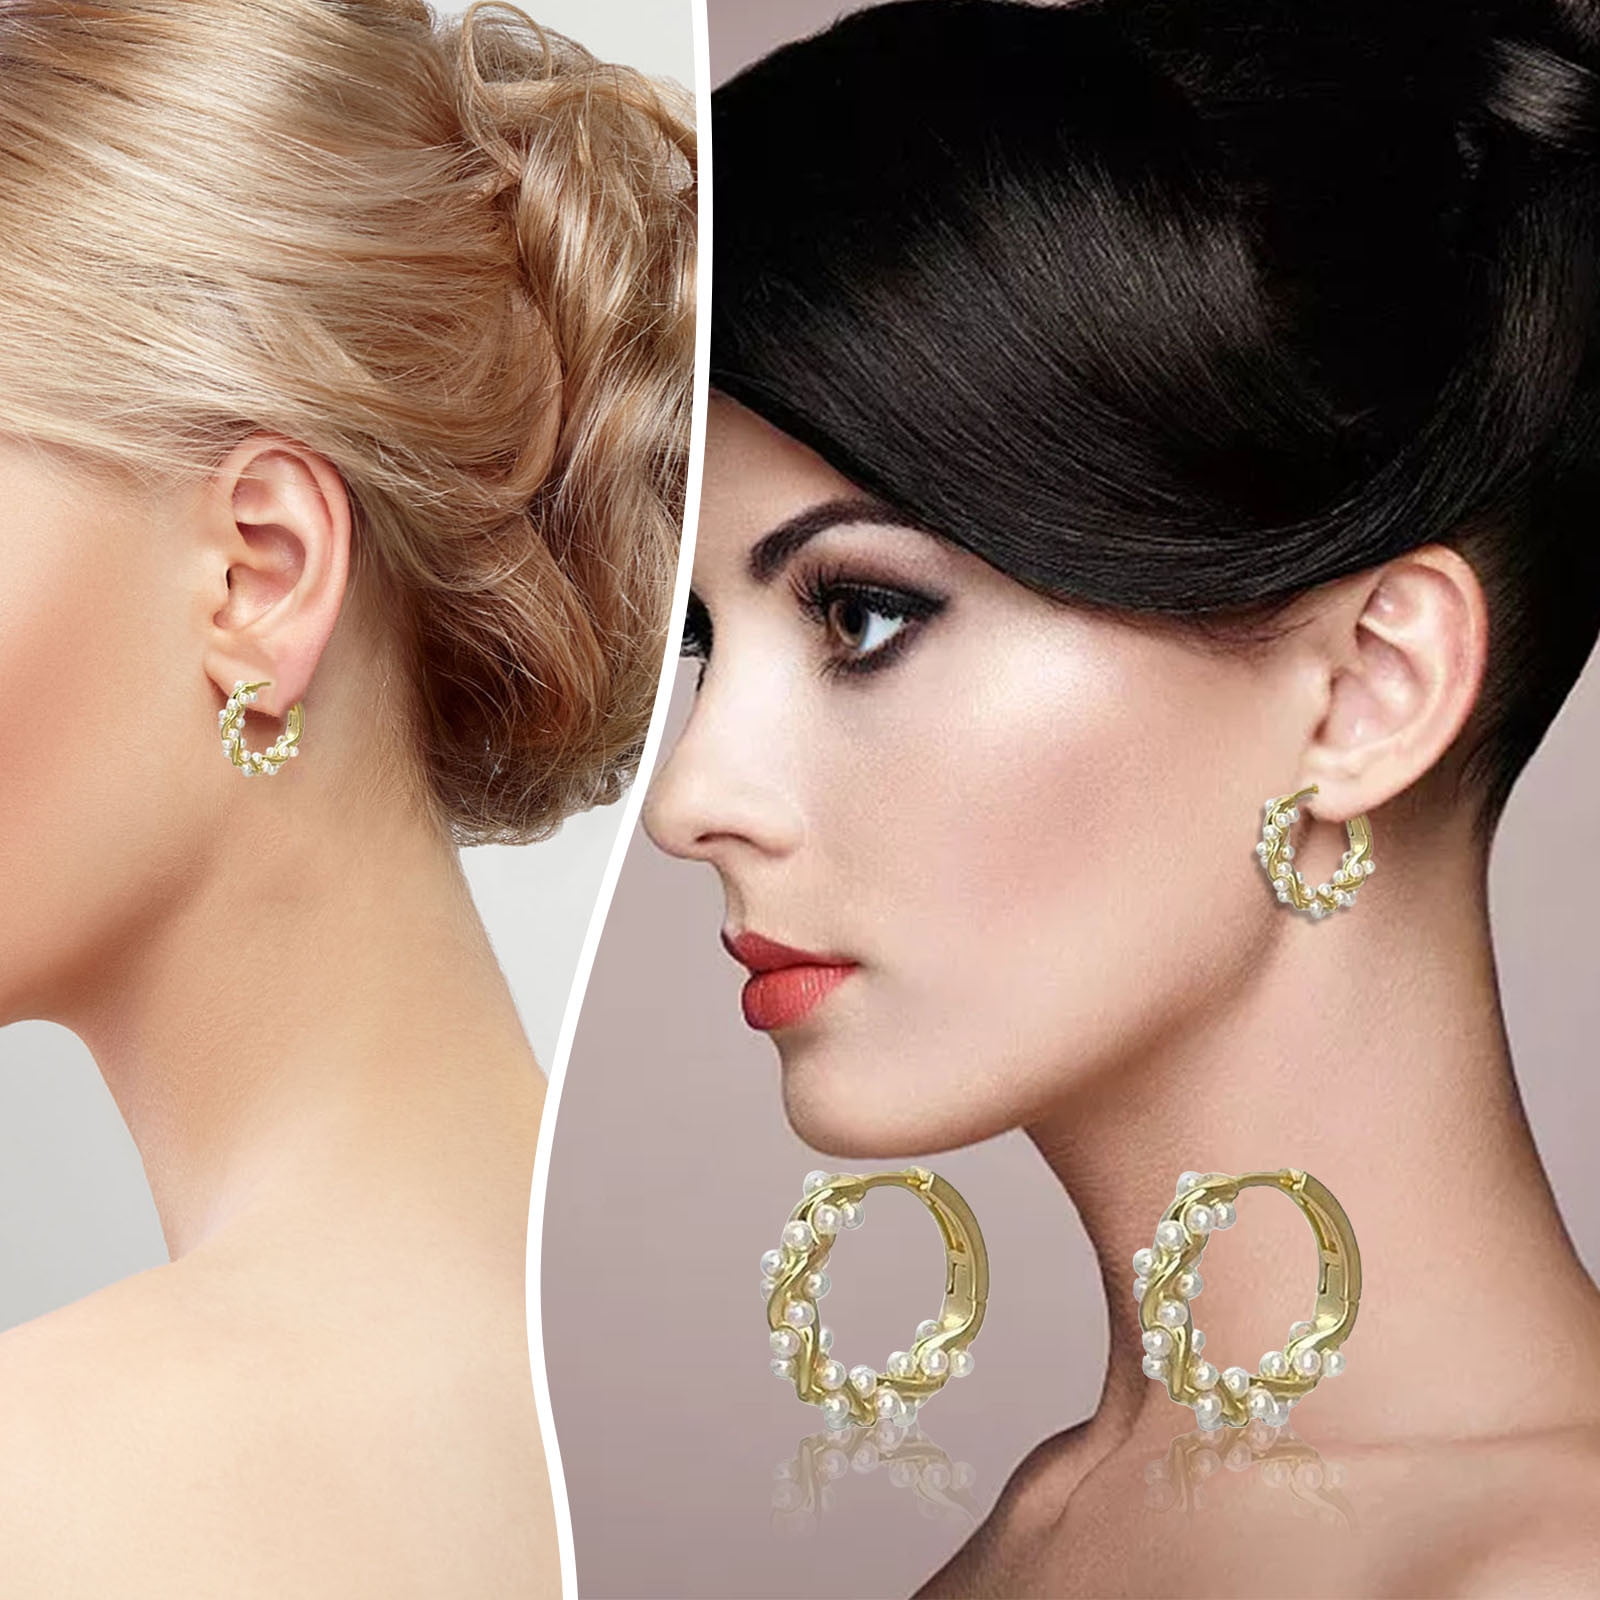 22kArt lightweight gold earrings with 916 hallmark certified #buttaearrings  #earrings #heavyearrings #goldearrings #jhumkas | Instagram